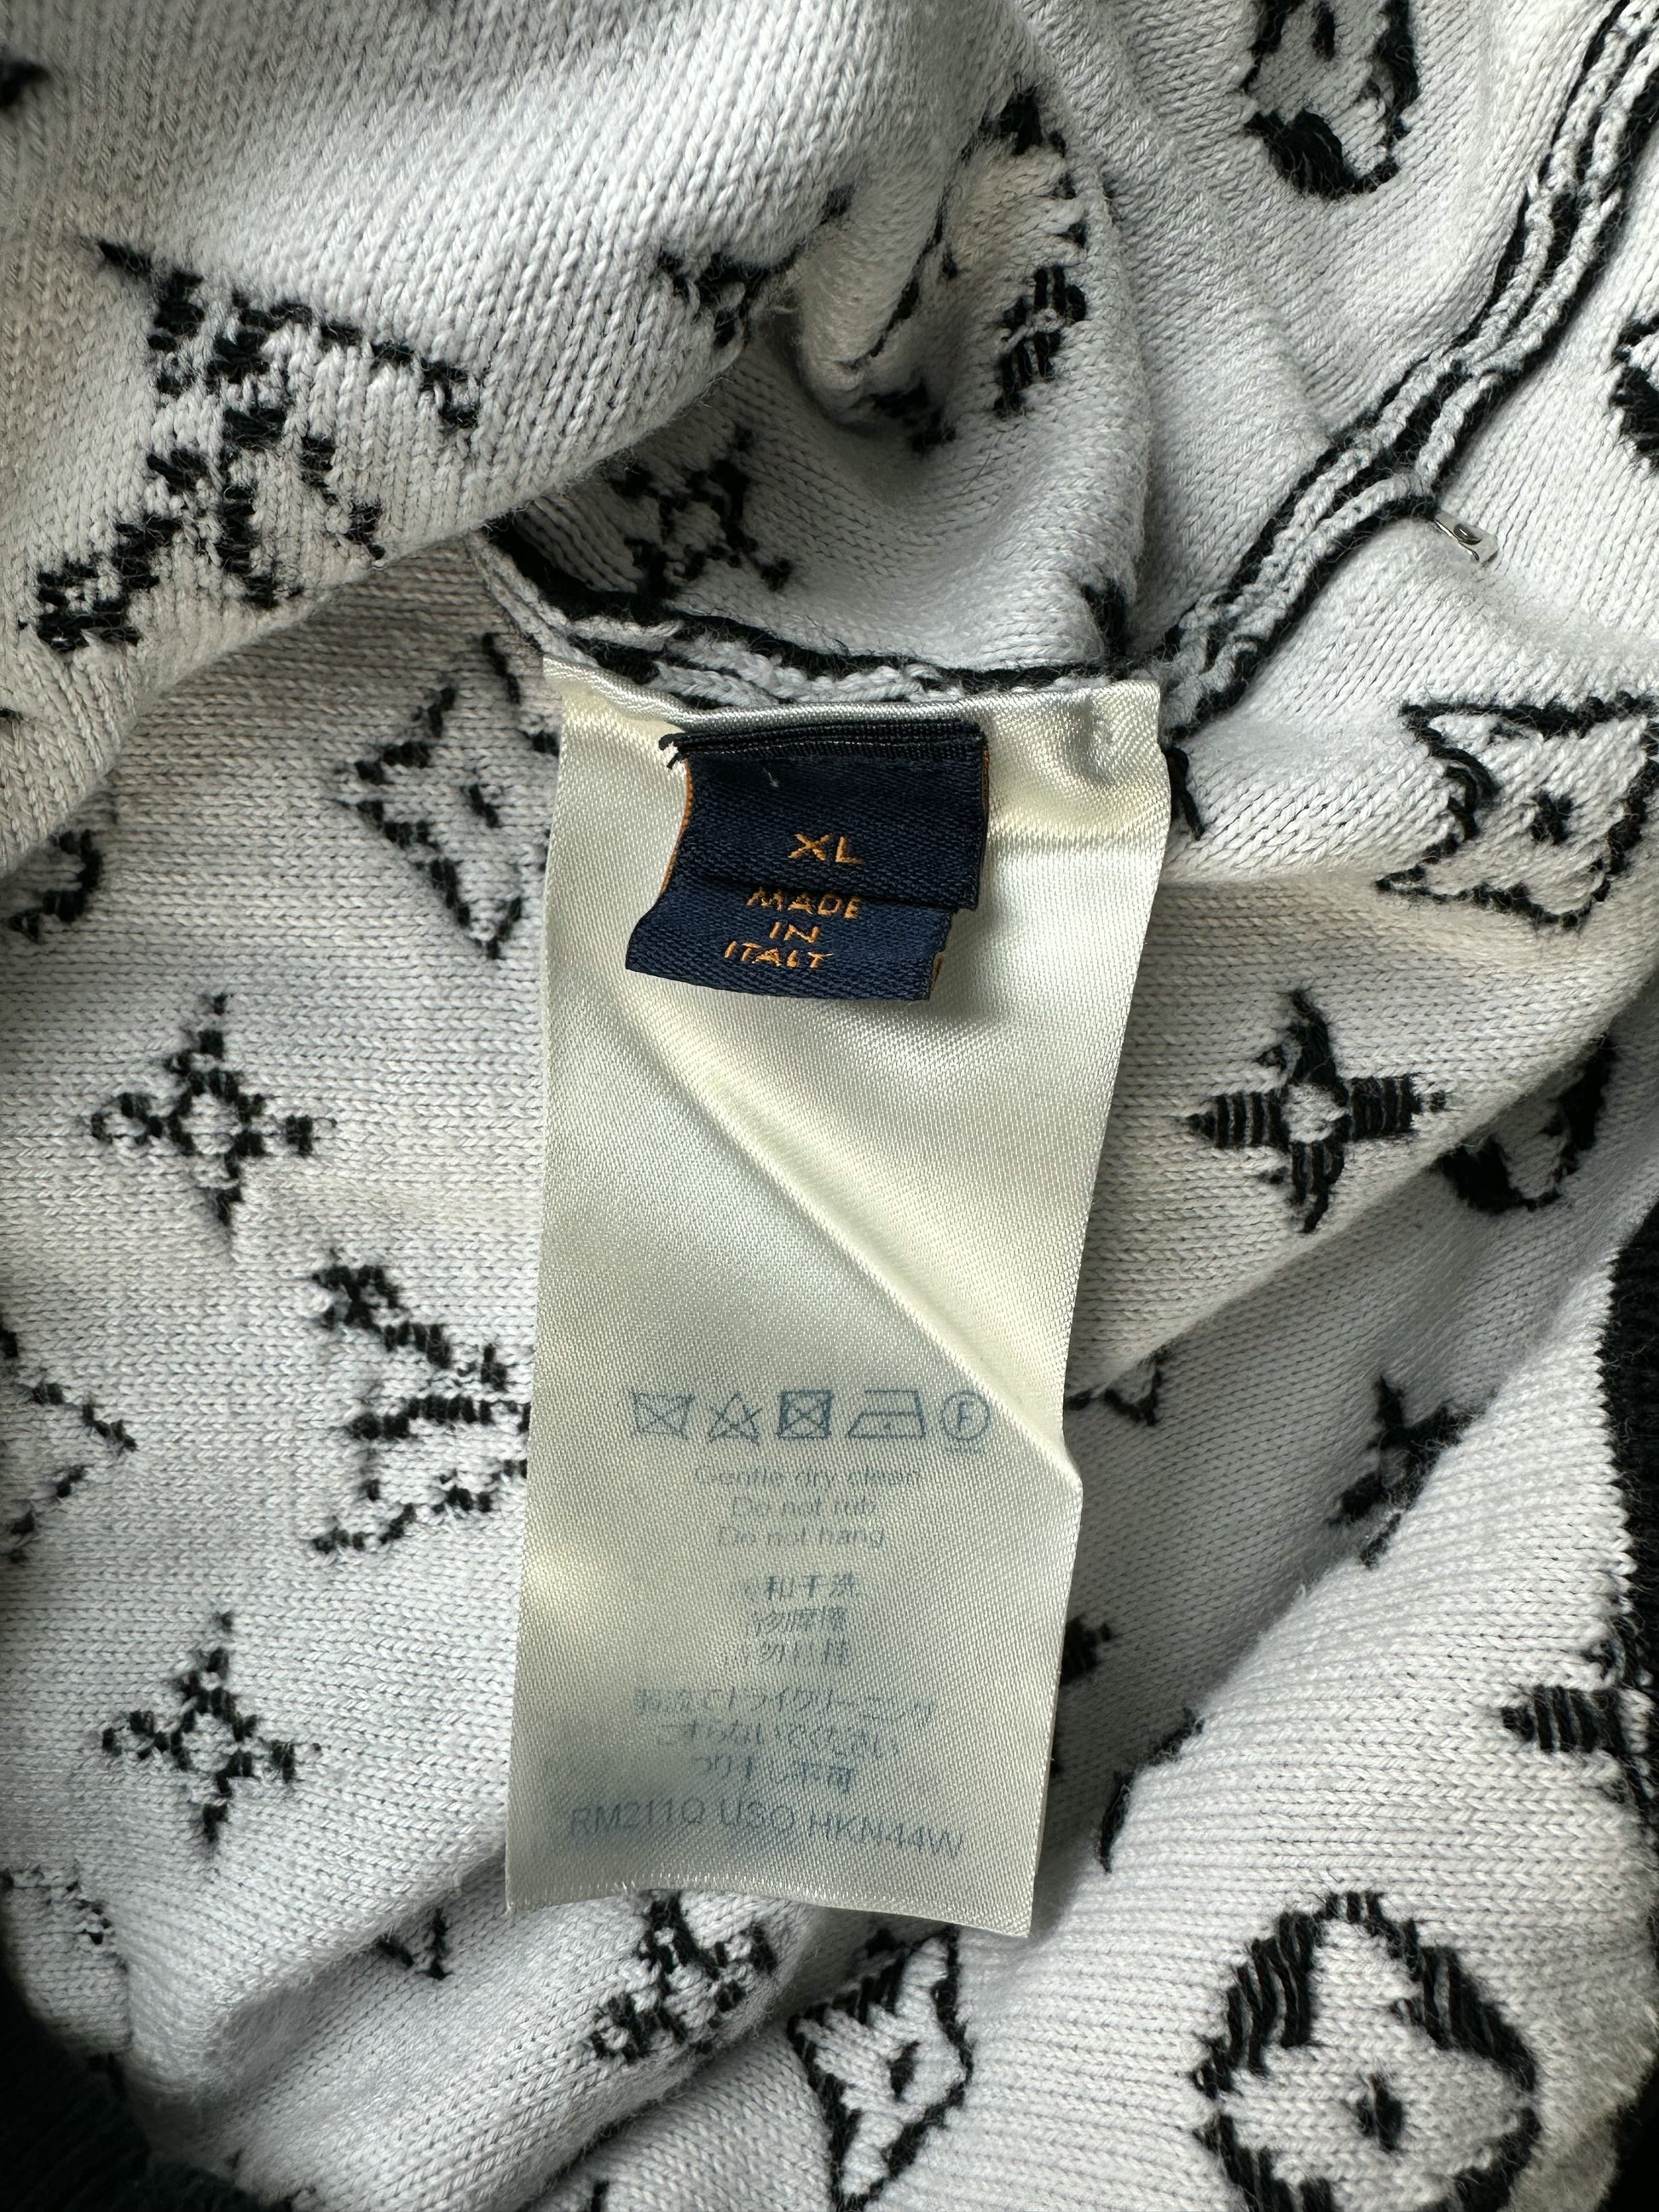 Louis Vuitton Monogram Gradient Knit Black Hoodie – Cheap